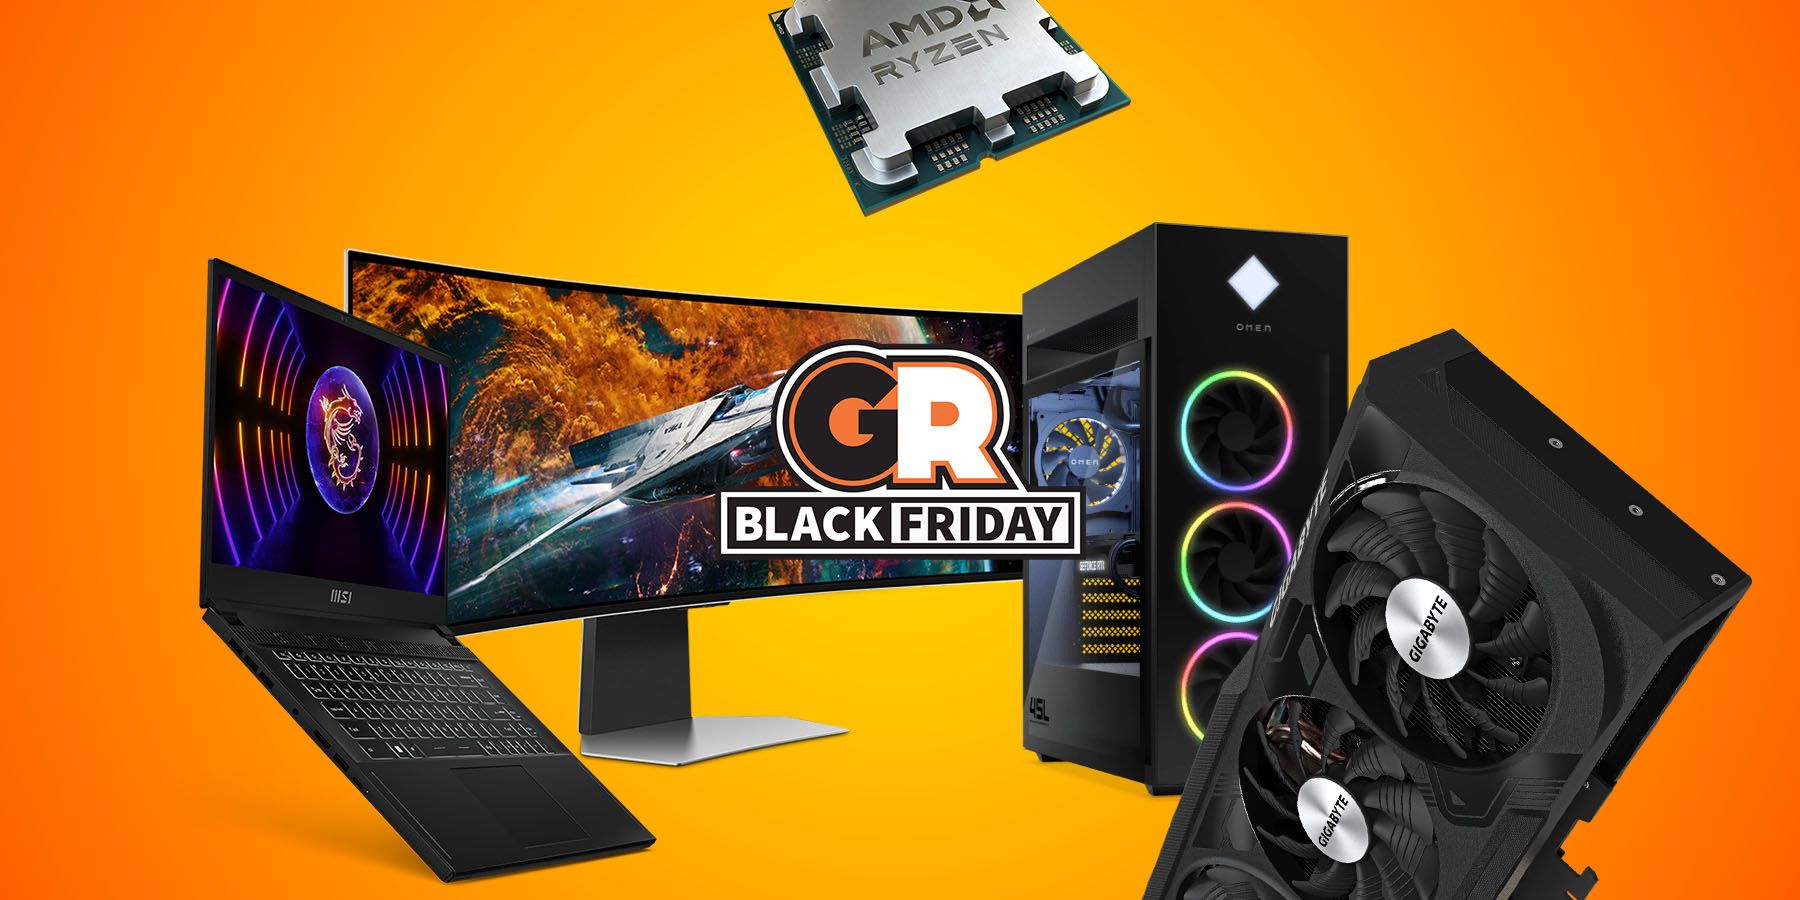 Best Buy Black Friday in July PC gaming sales: CyberPowerPC desktops,  laptops, mice, more